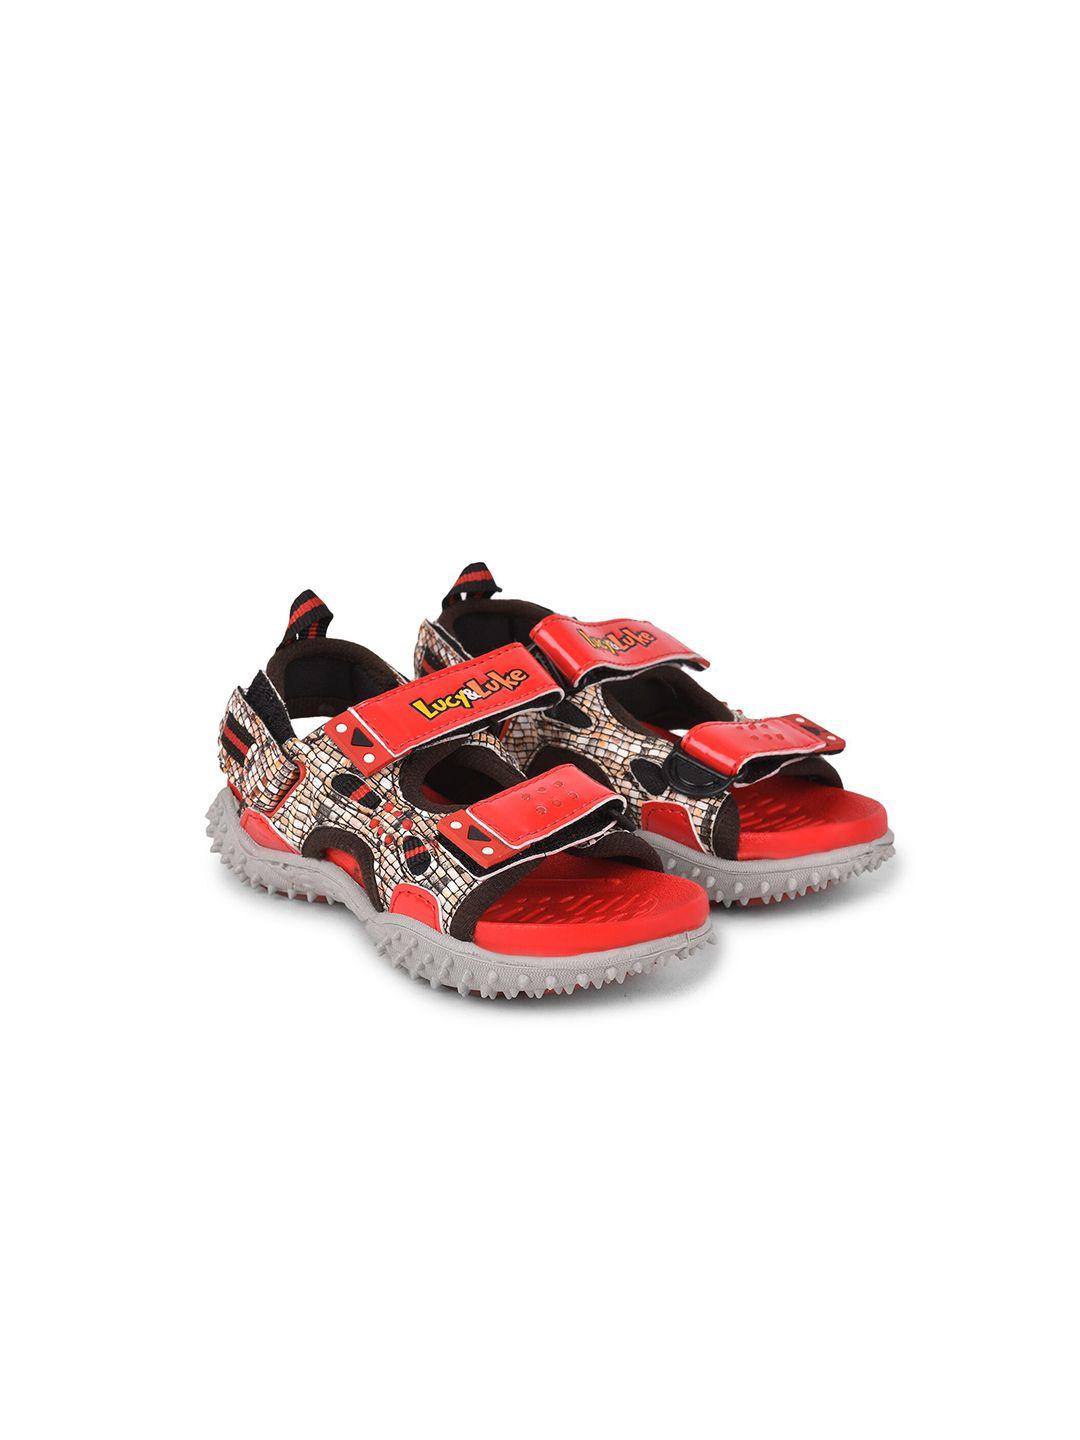 liberty kids red printed comfort sandals